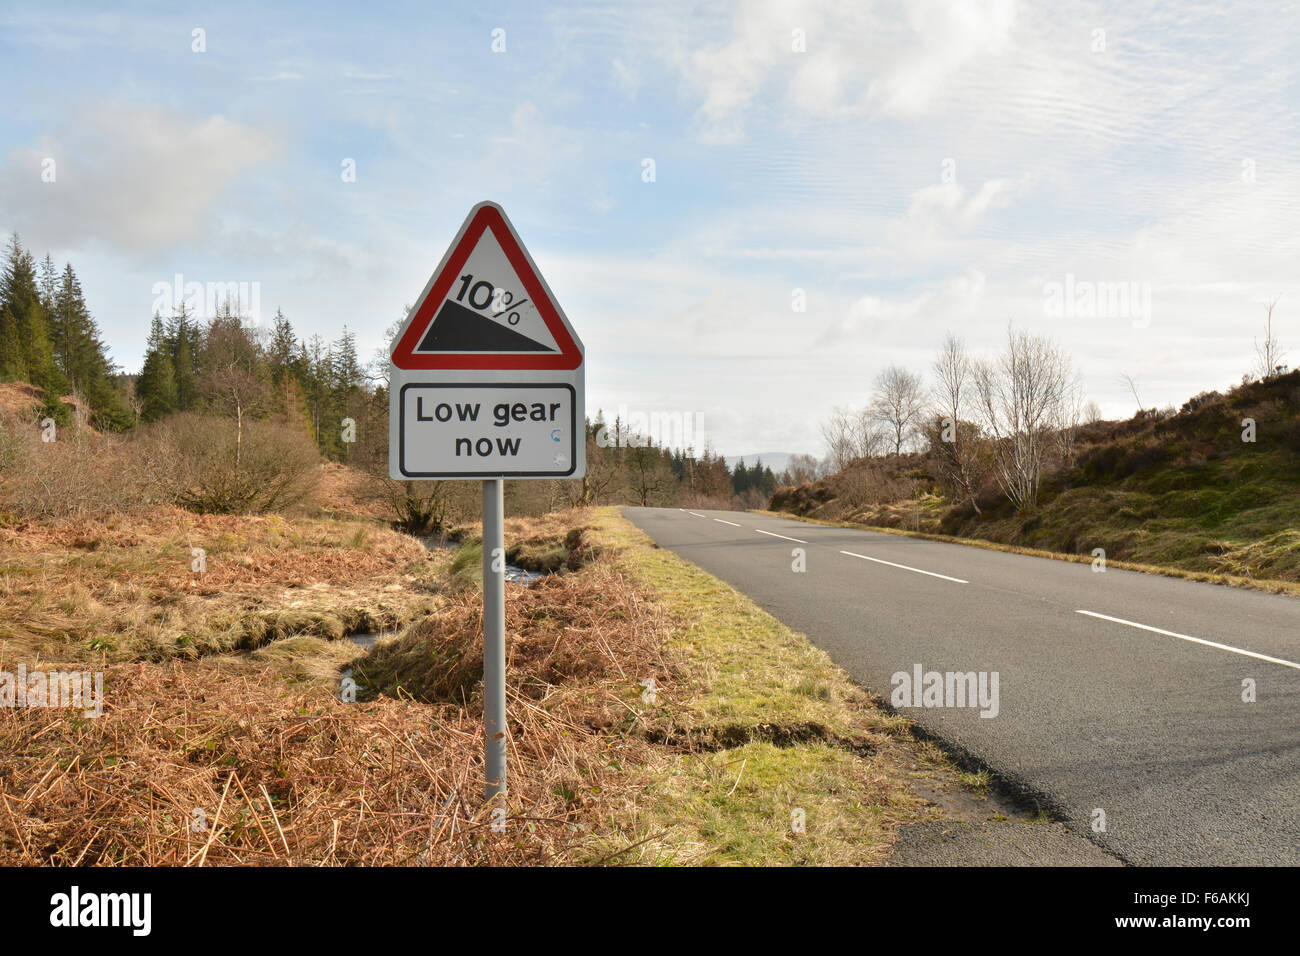 dukes-pass-trossachs-scotland-uk-10-gradient-road-sign-low-gear-now-F6AKKJ.jpg